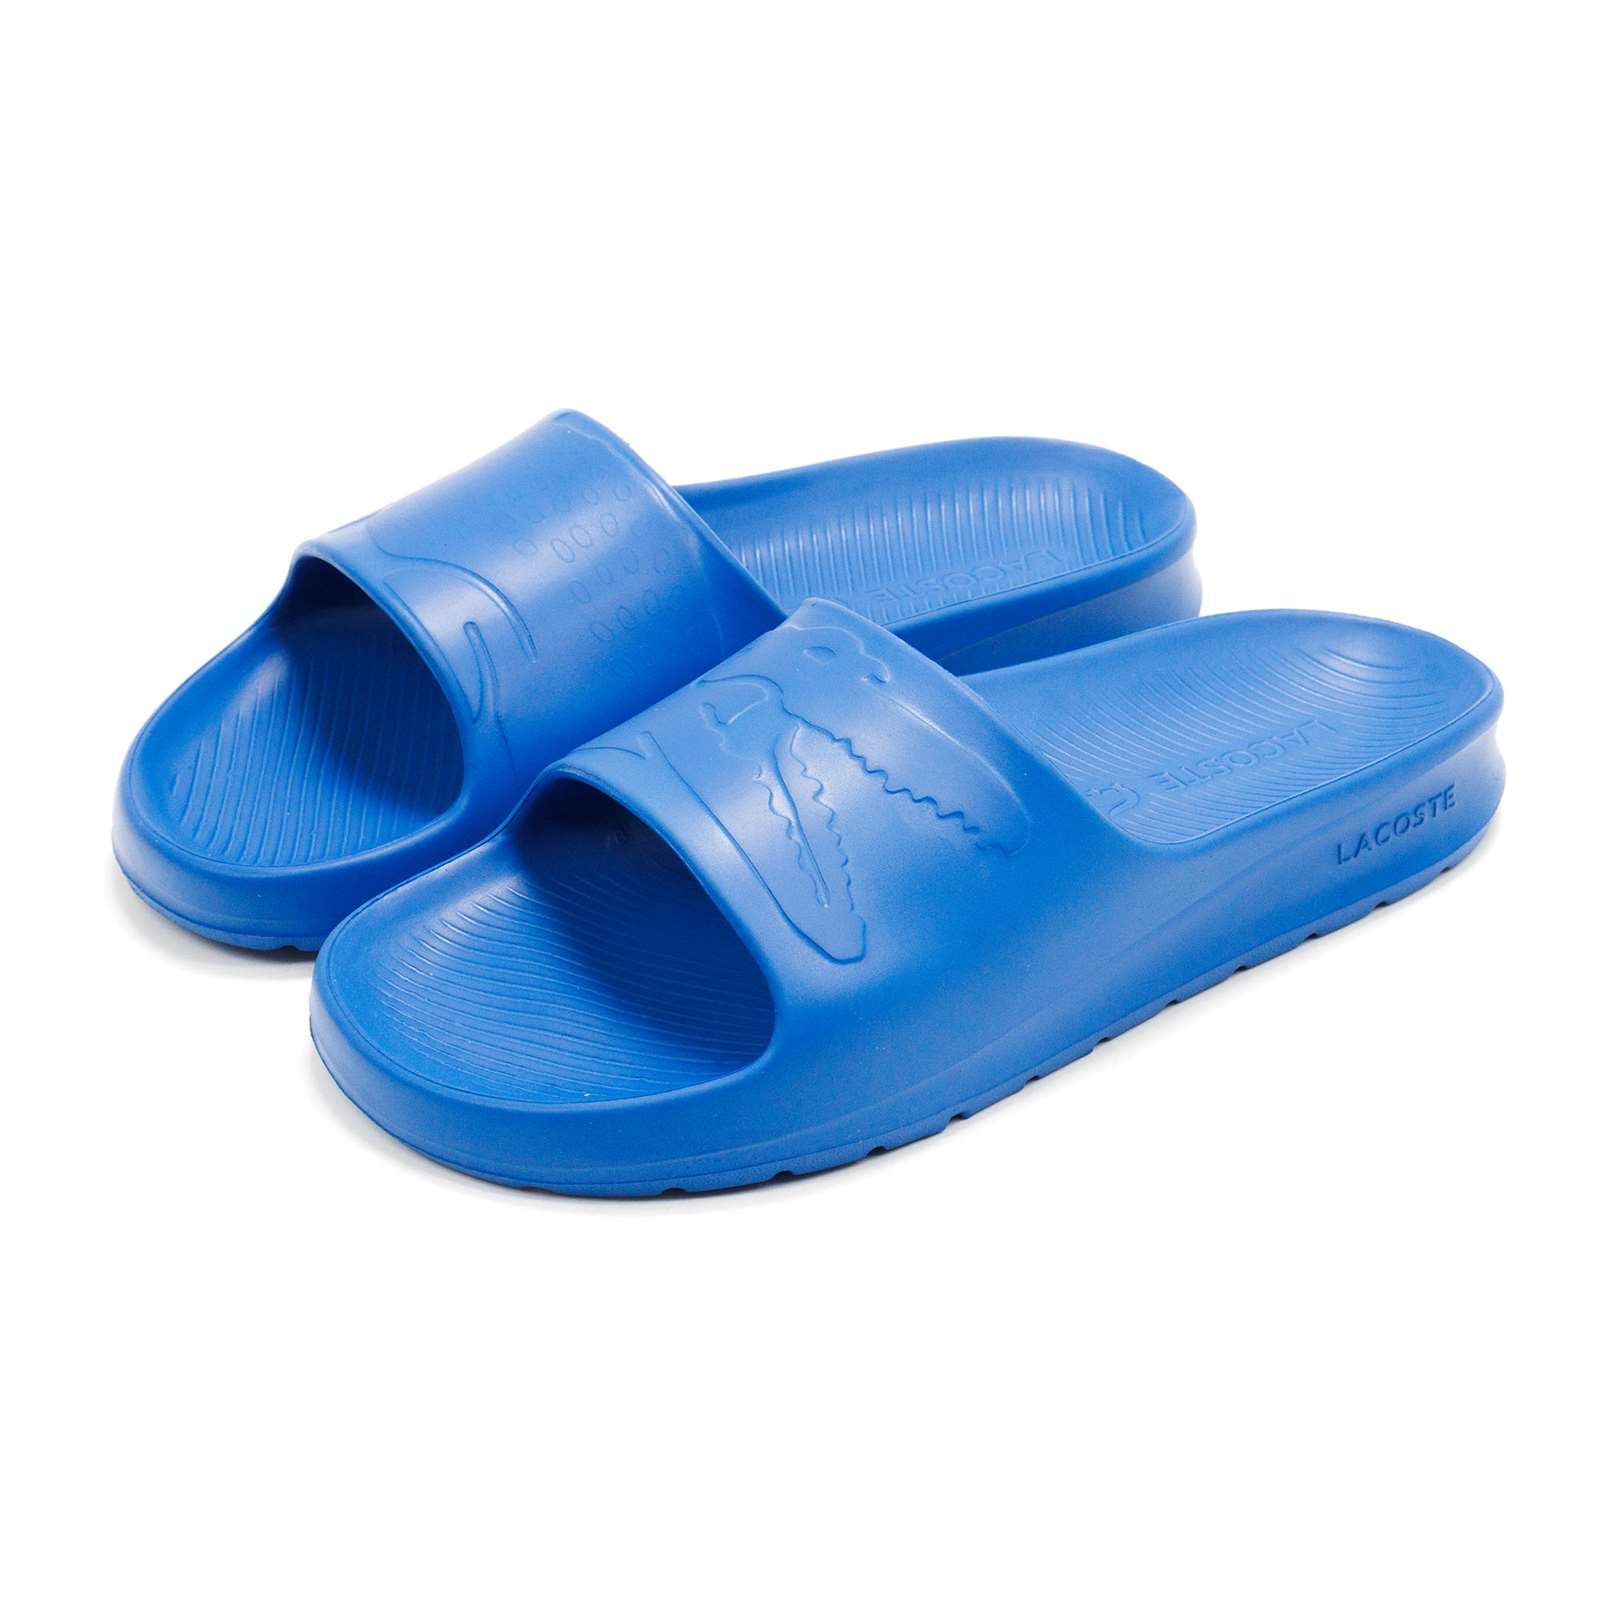 Lacoste Men Croco 2.0 1122 2 Slide Sandals